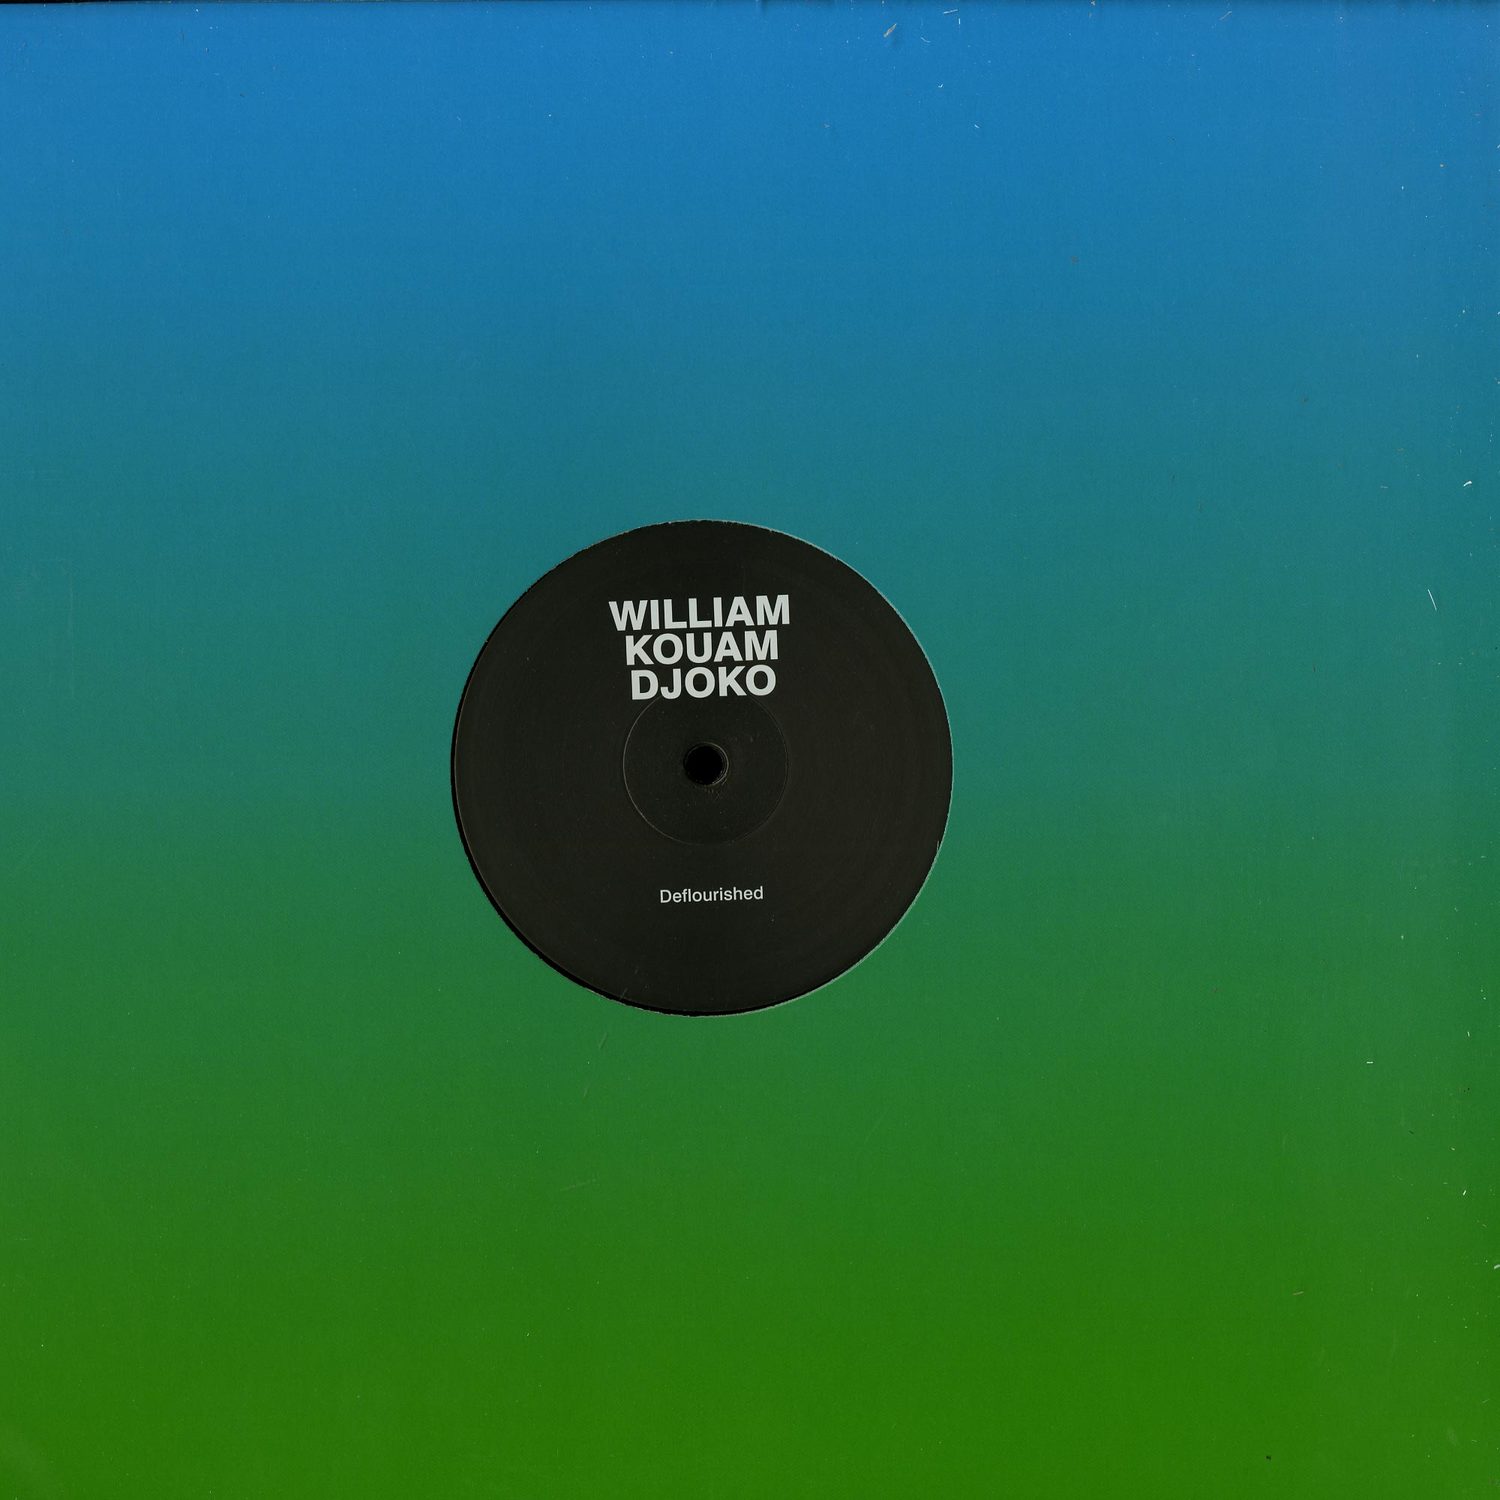 William Kouam DJoko - DEFLOURISHED EP